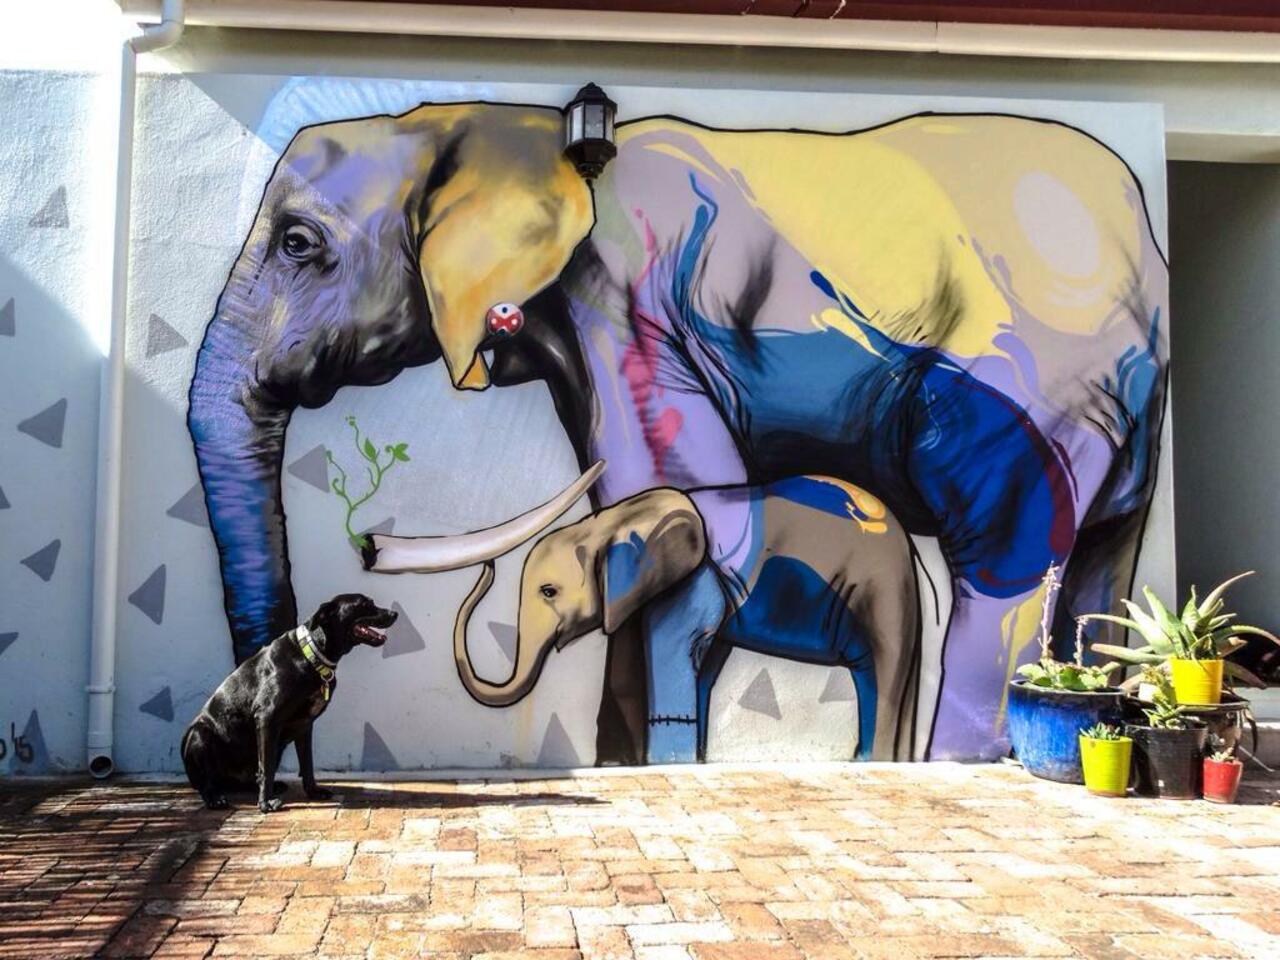 Latest nature in Street Art piece by Falko Paints In Cape Town

#art #mural #graffiti #streetart http://t.co/MJJDuSijgv